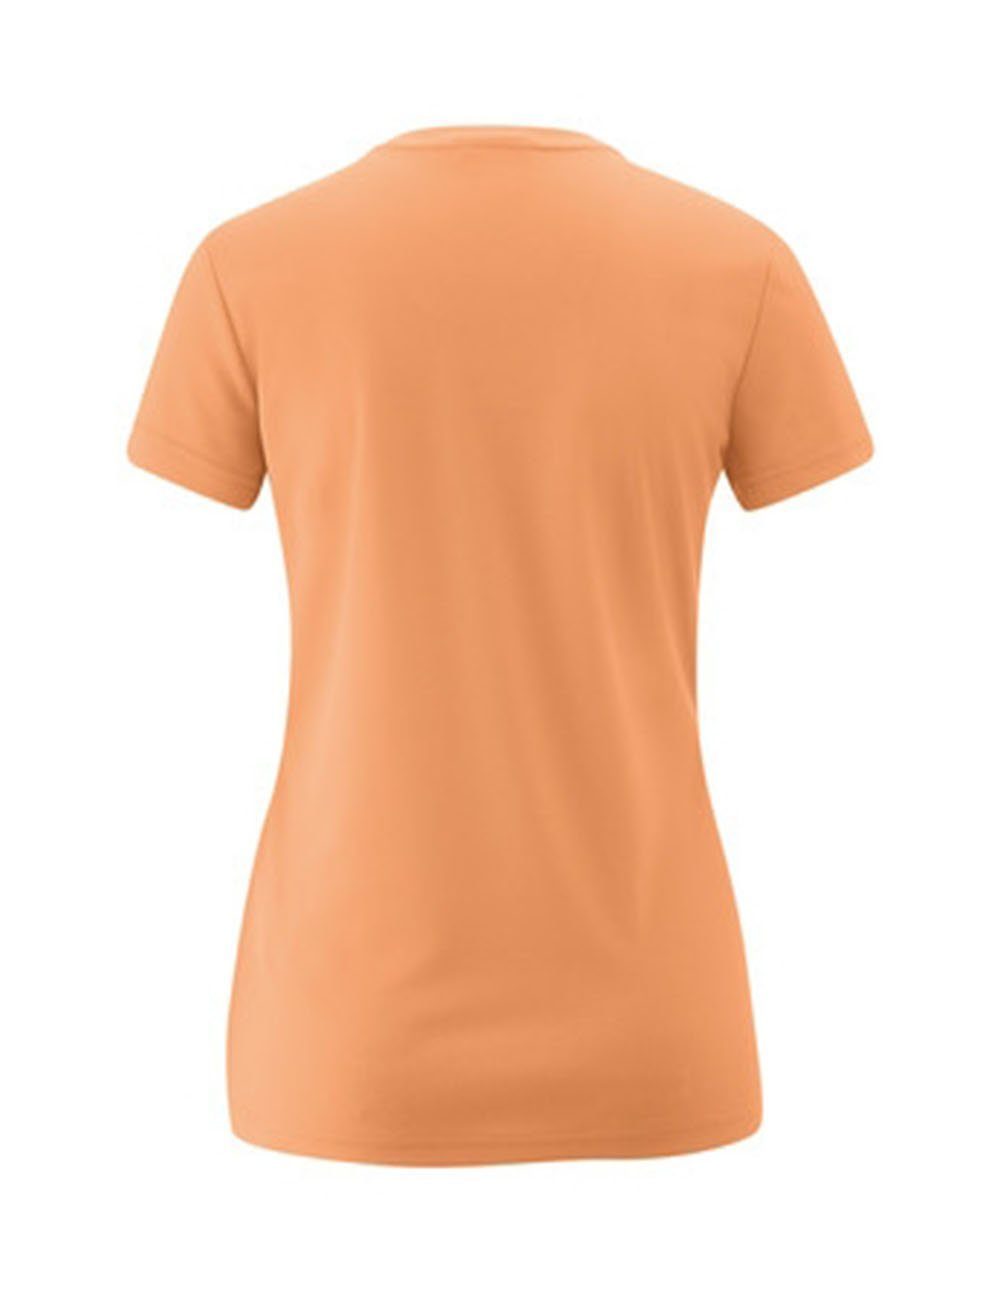 Maier Sports Laufshirt Trudy 252310 T-Shirt Sports orange Da. Maier